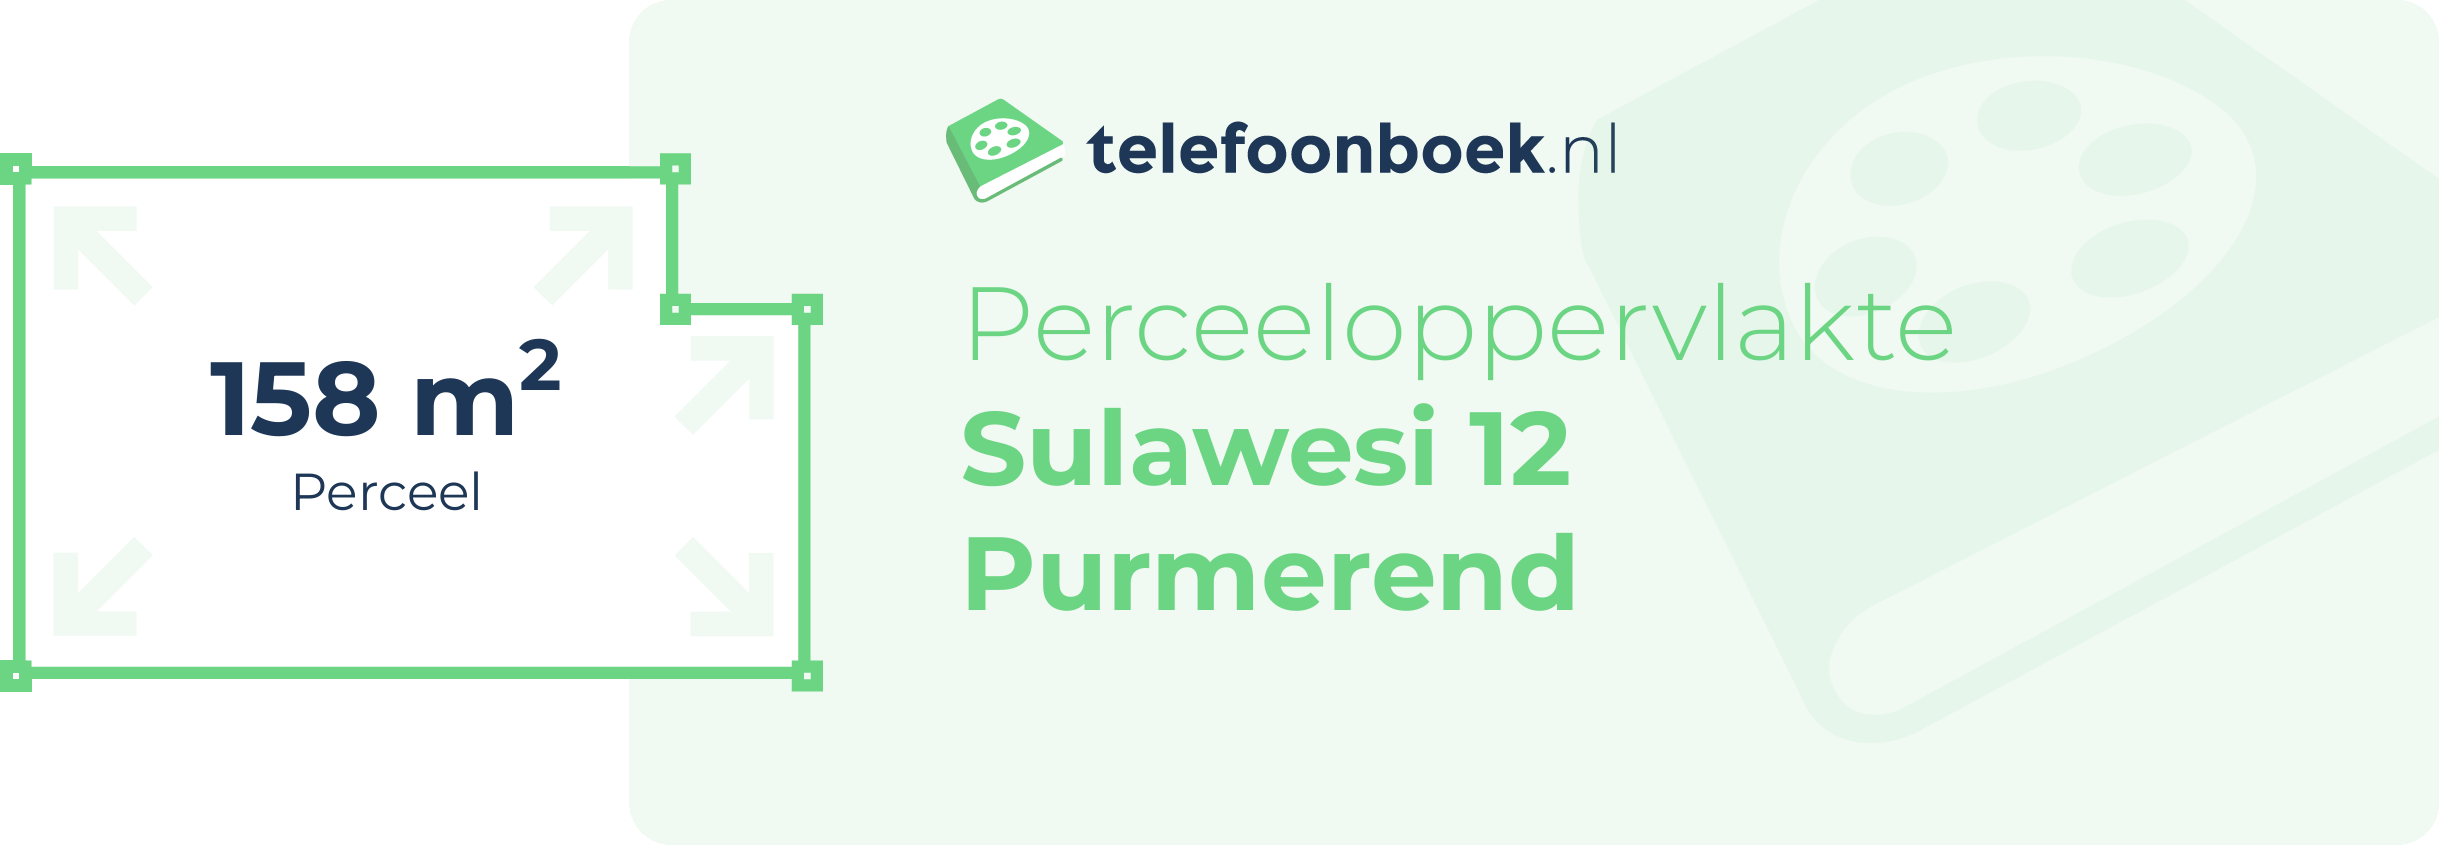 Perceeloppervlakte Sulawesi 12 Purmerend